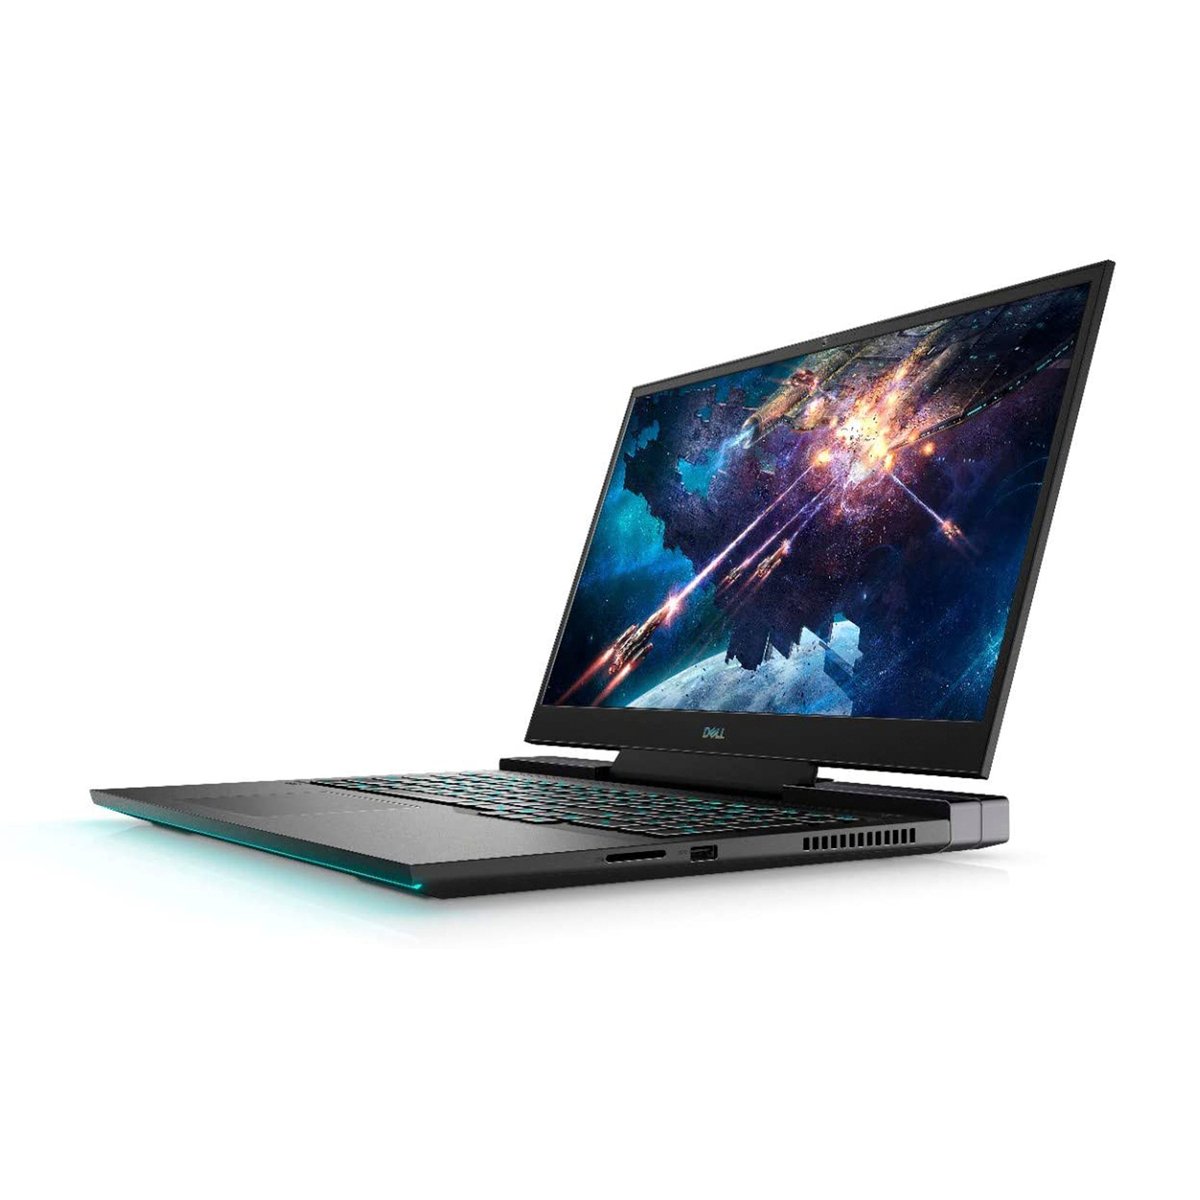 Dell G7 17 7700 Gaming Laptop 17.3 inch FHD 1920 x 1080, 144Hz,9ms Display Intel Core i7-10750H 5.0 GHz,16GB Ram,1TB SSD,8GB GeForce RTX 2070,Eng-Arabic RGB KB,Windows 10 Home,Black